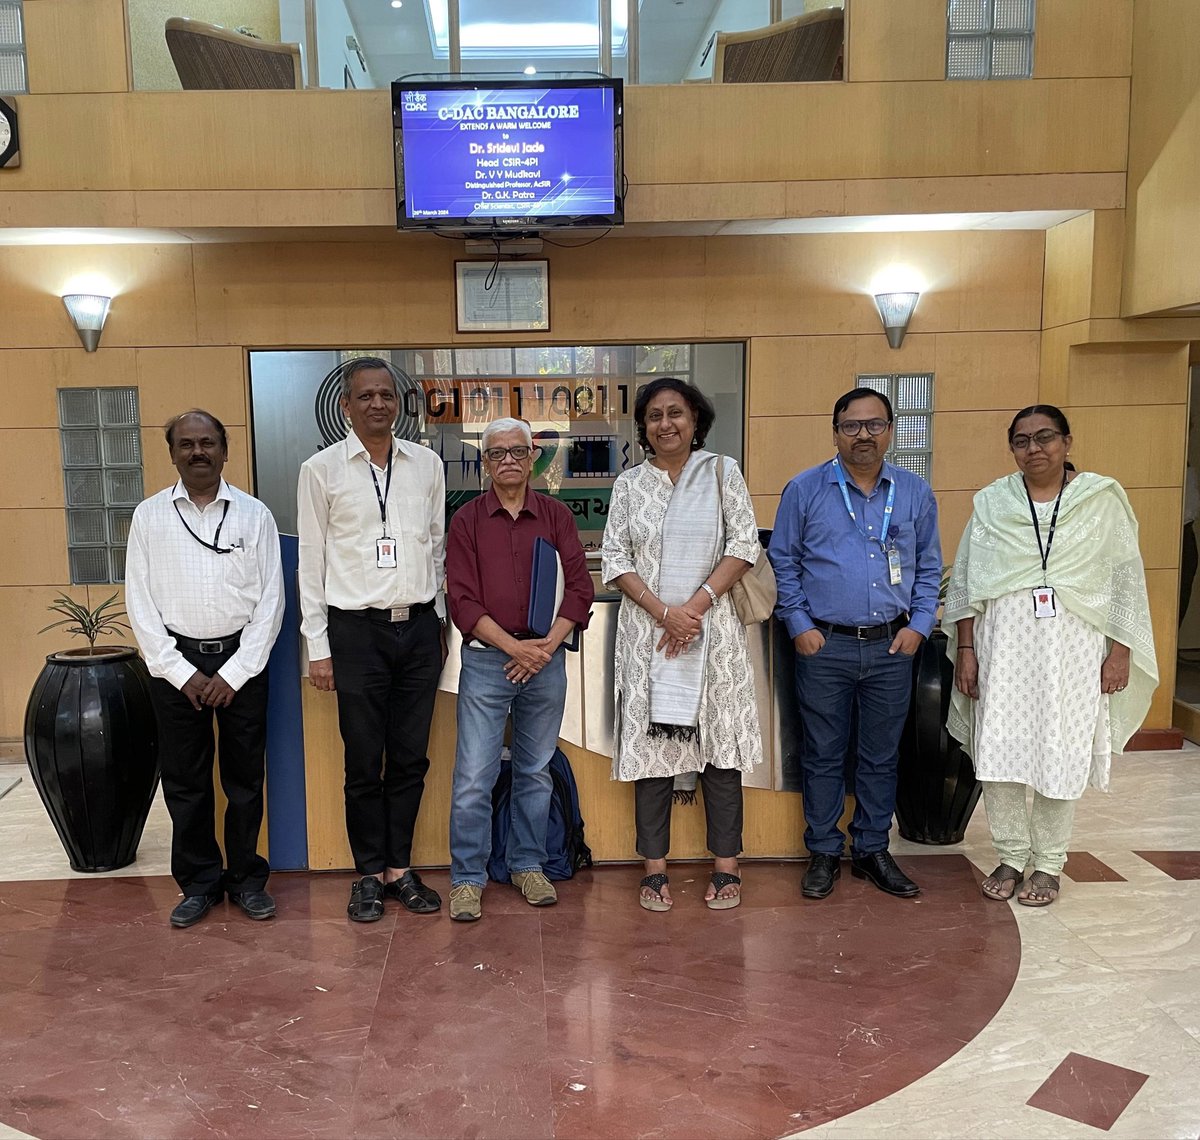 Meeting at C-DAC Bangalore with Dr. Sudarshan, ED, C-DAC along with Dr. Mudkavi , distinguished emeritus professor AcSIR. Very promising interactions and way forward between CSIR, C-DAC, NSM & AcSIR. Visit to HPC, QuBIT studio and chip lab @CSIR_IND @AcSIR_India @CDACBengaluru